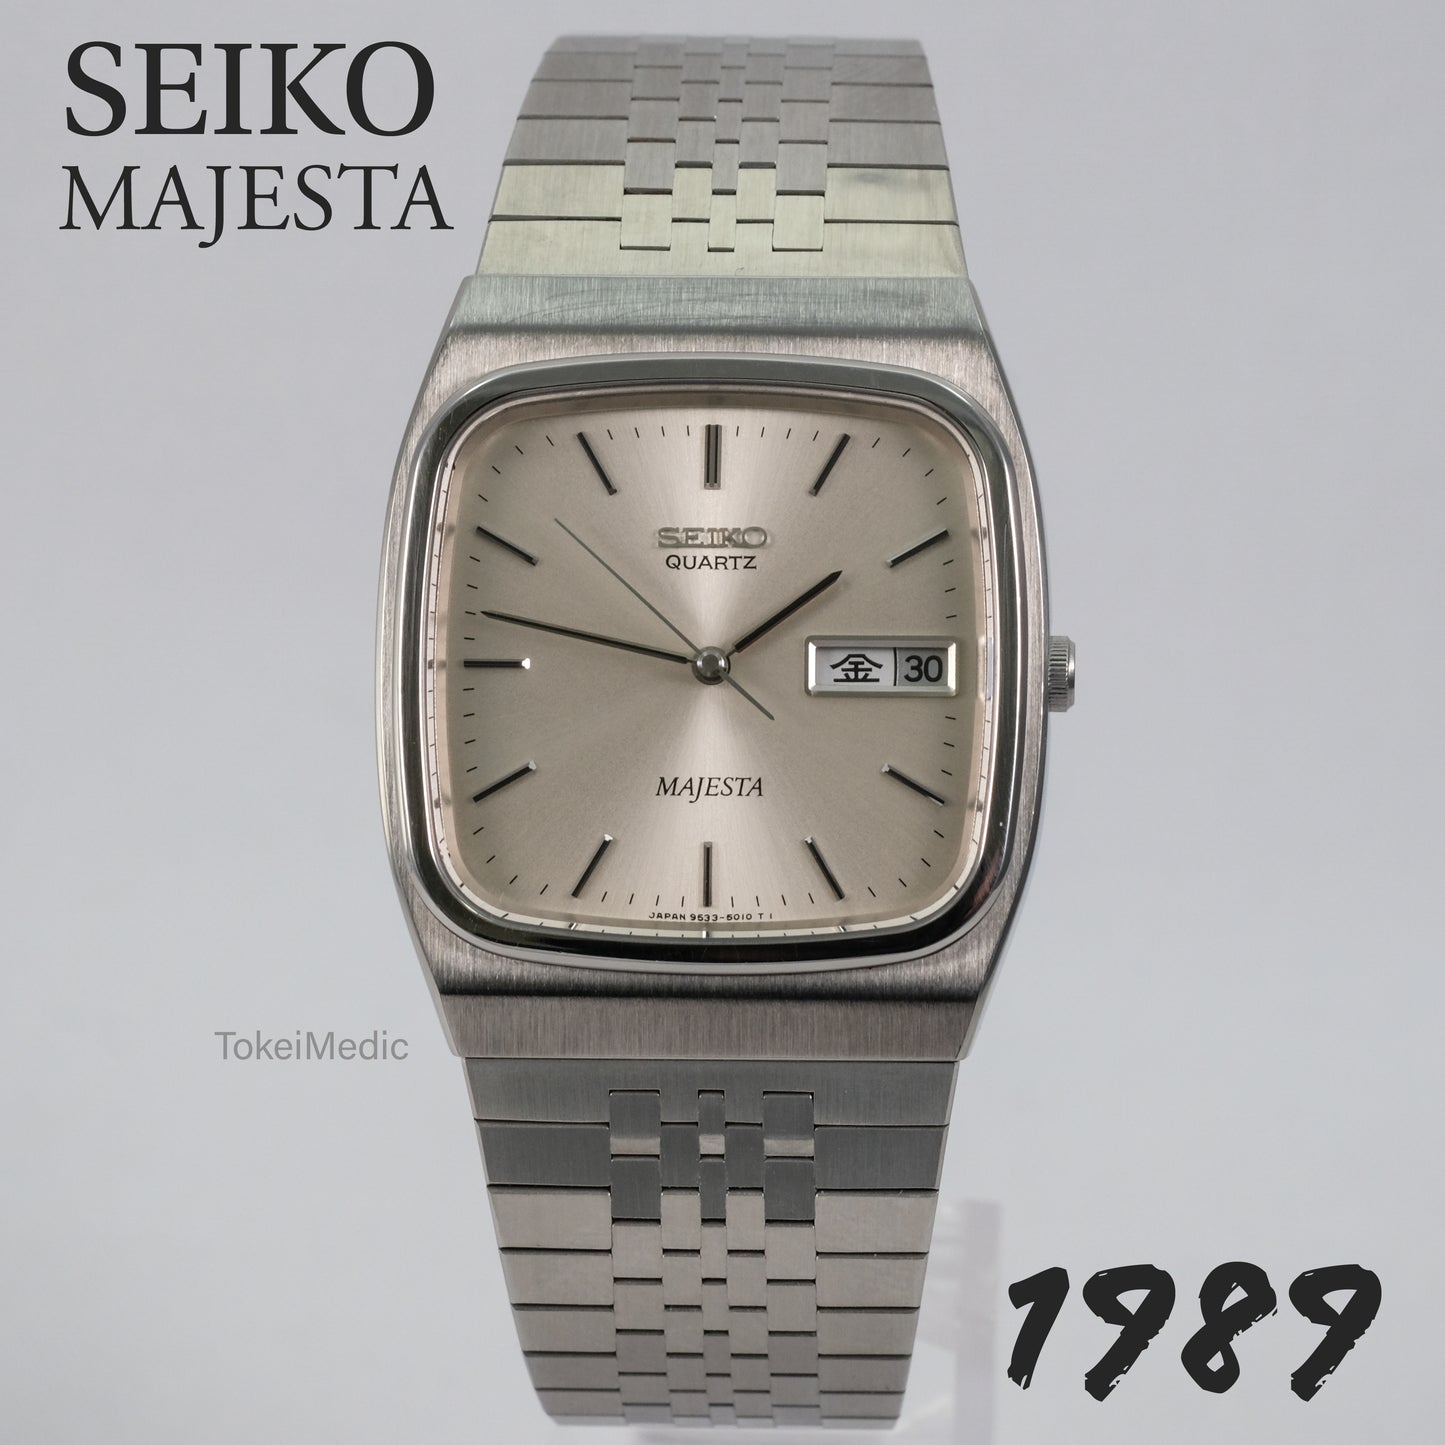 1989 Seiko Majesta 9533-5010